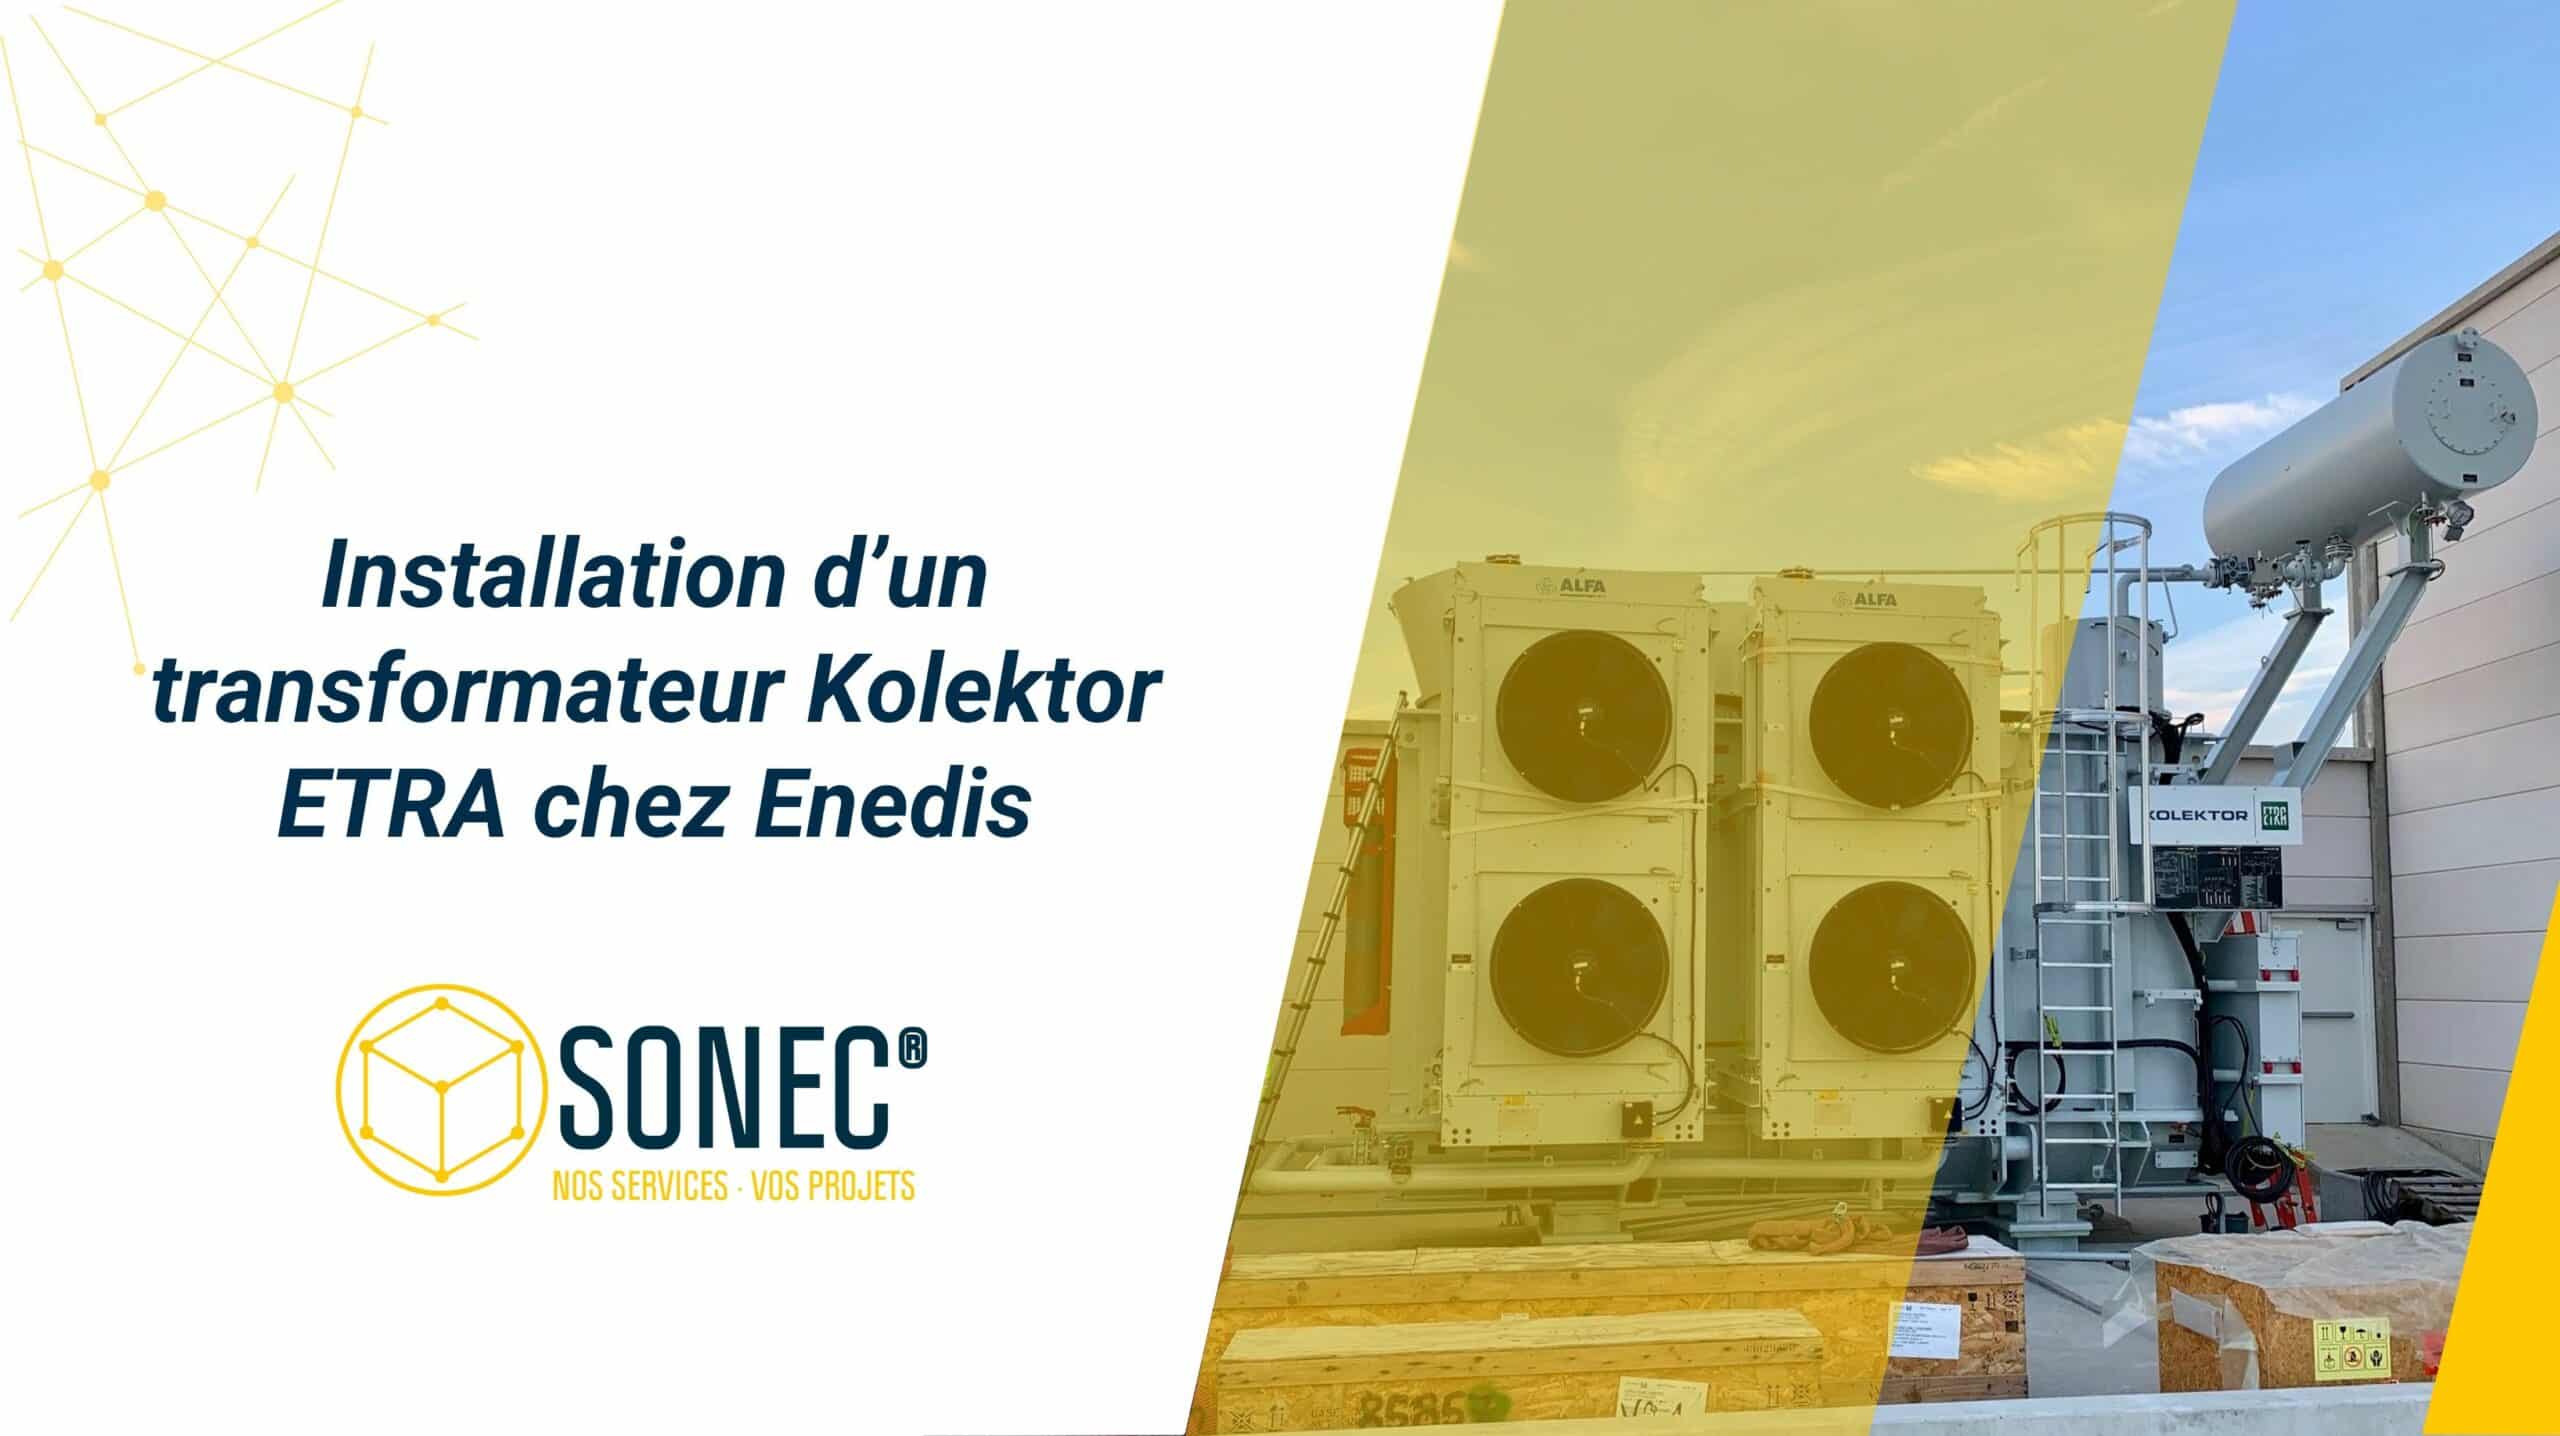 Installazione SONEC: trasformatore ETRA Kolektor presso Enedis